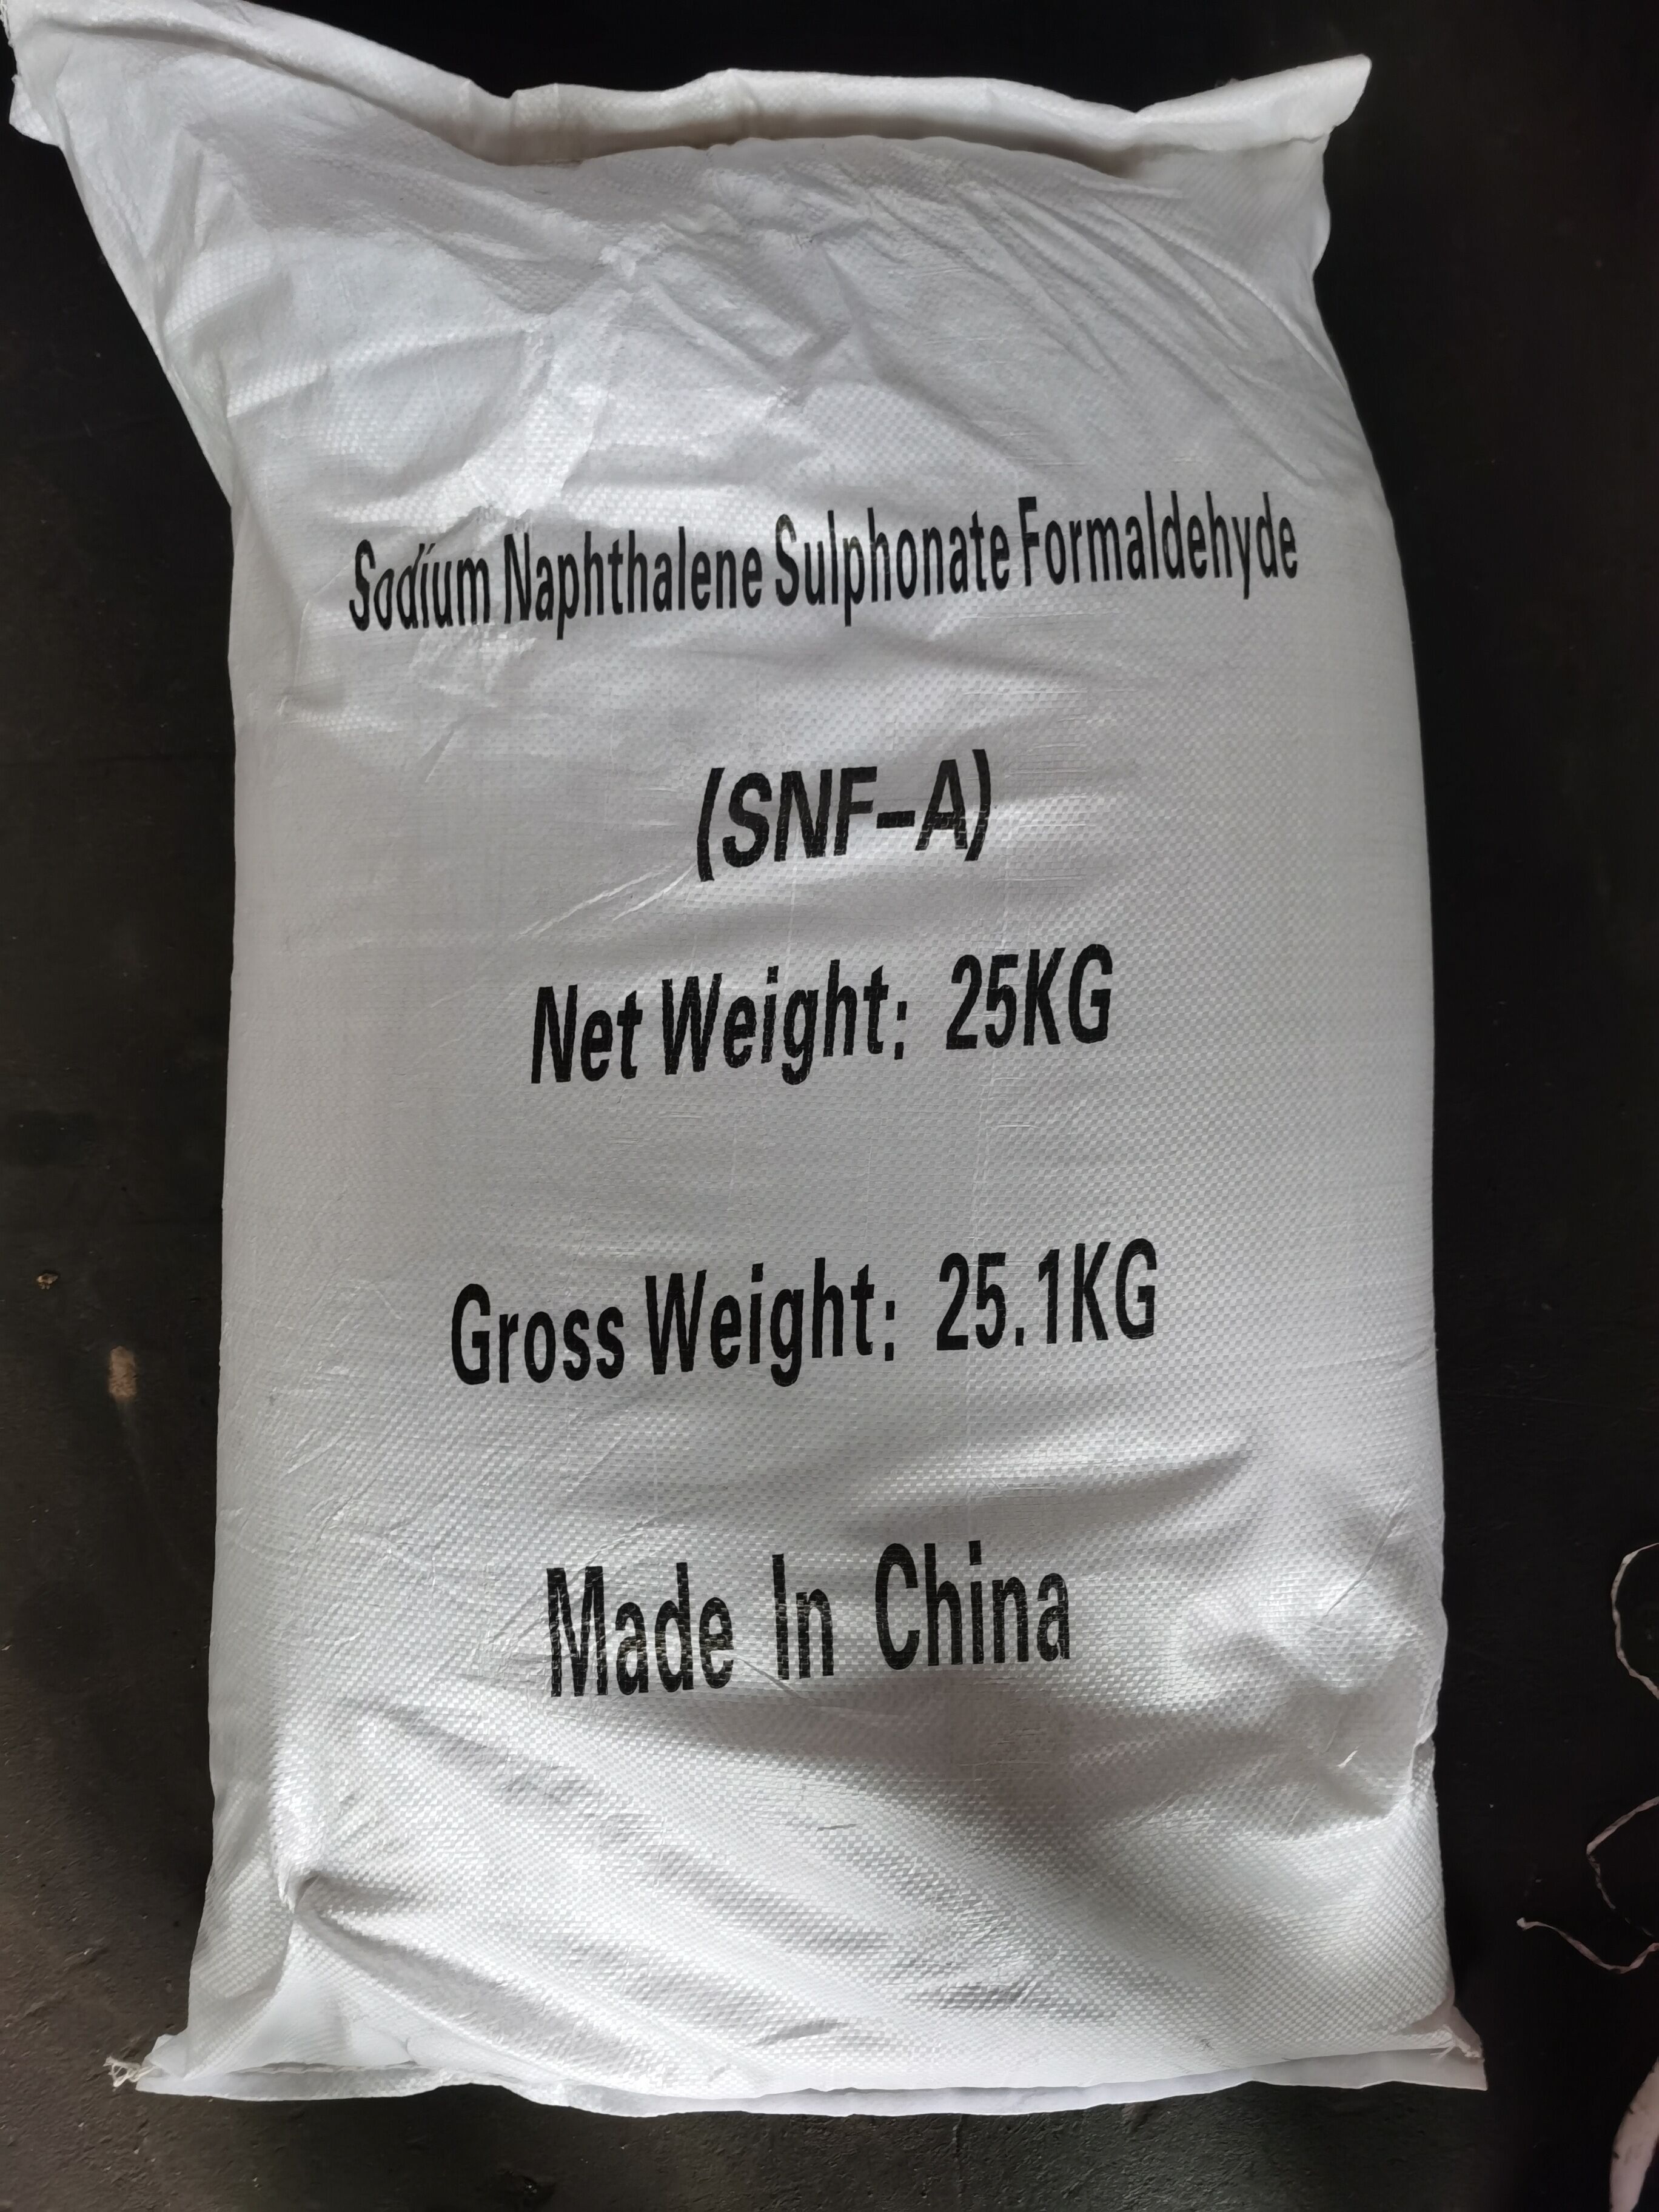 Sodium Naphthalene Sulfonate Formaldehyde